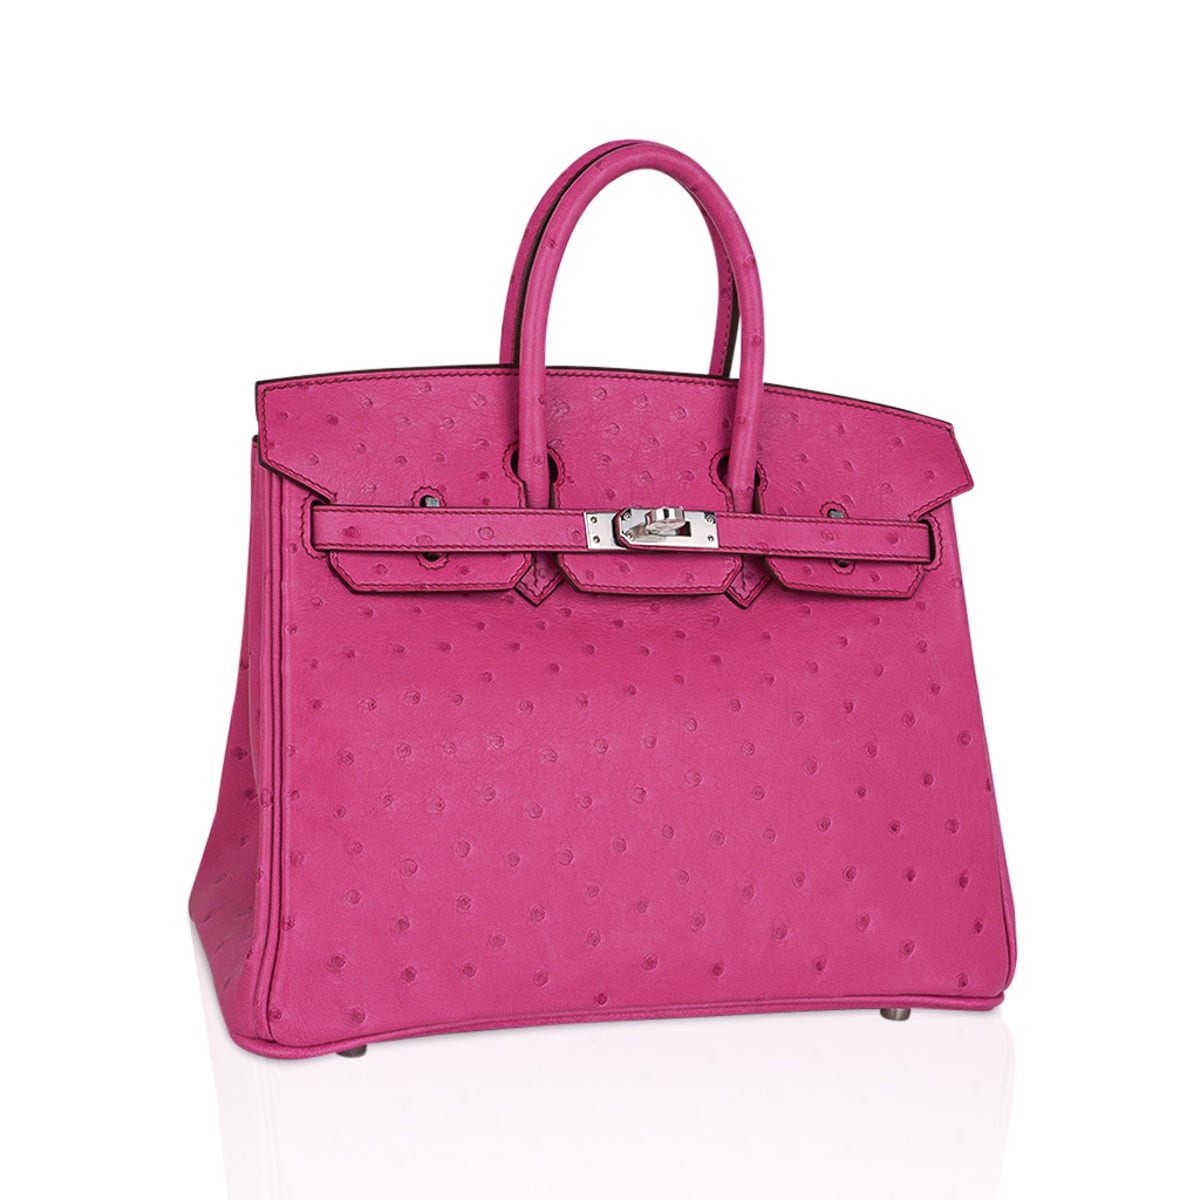 Hermès birkin touch 25cm  Bags, Luxury purses, Pretty bags